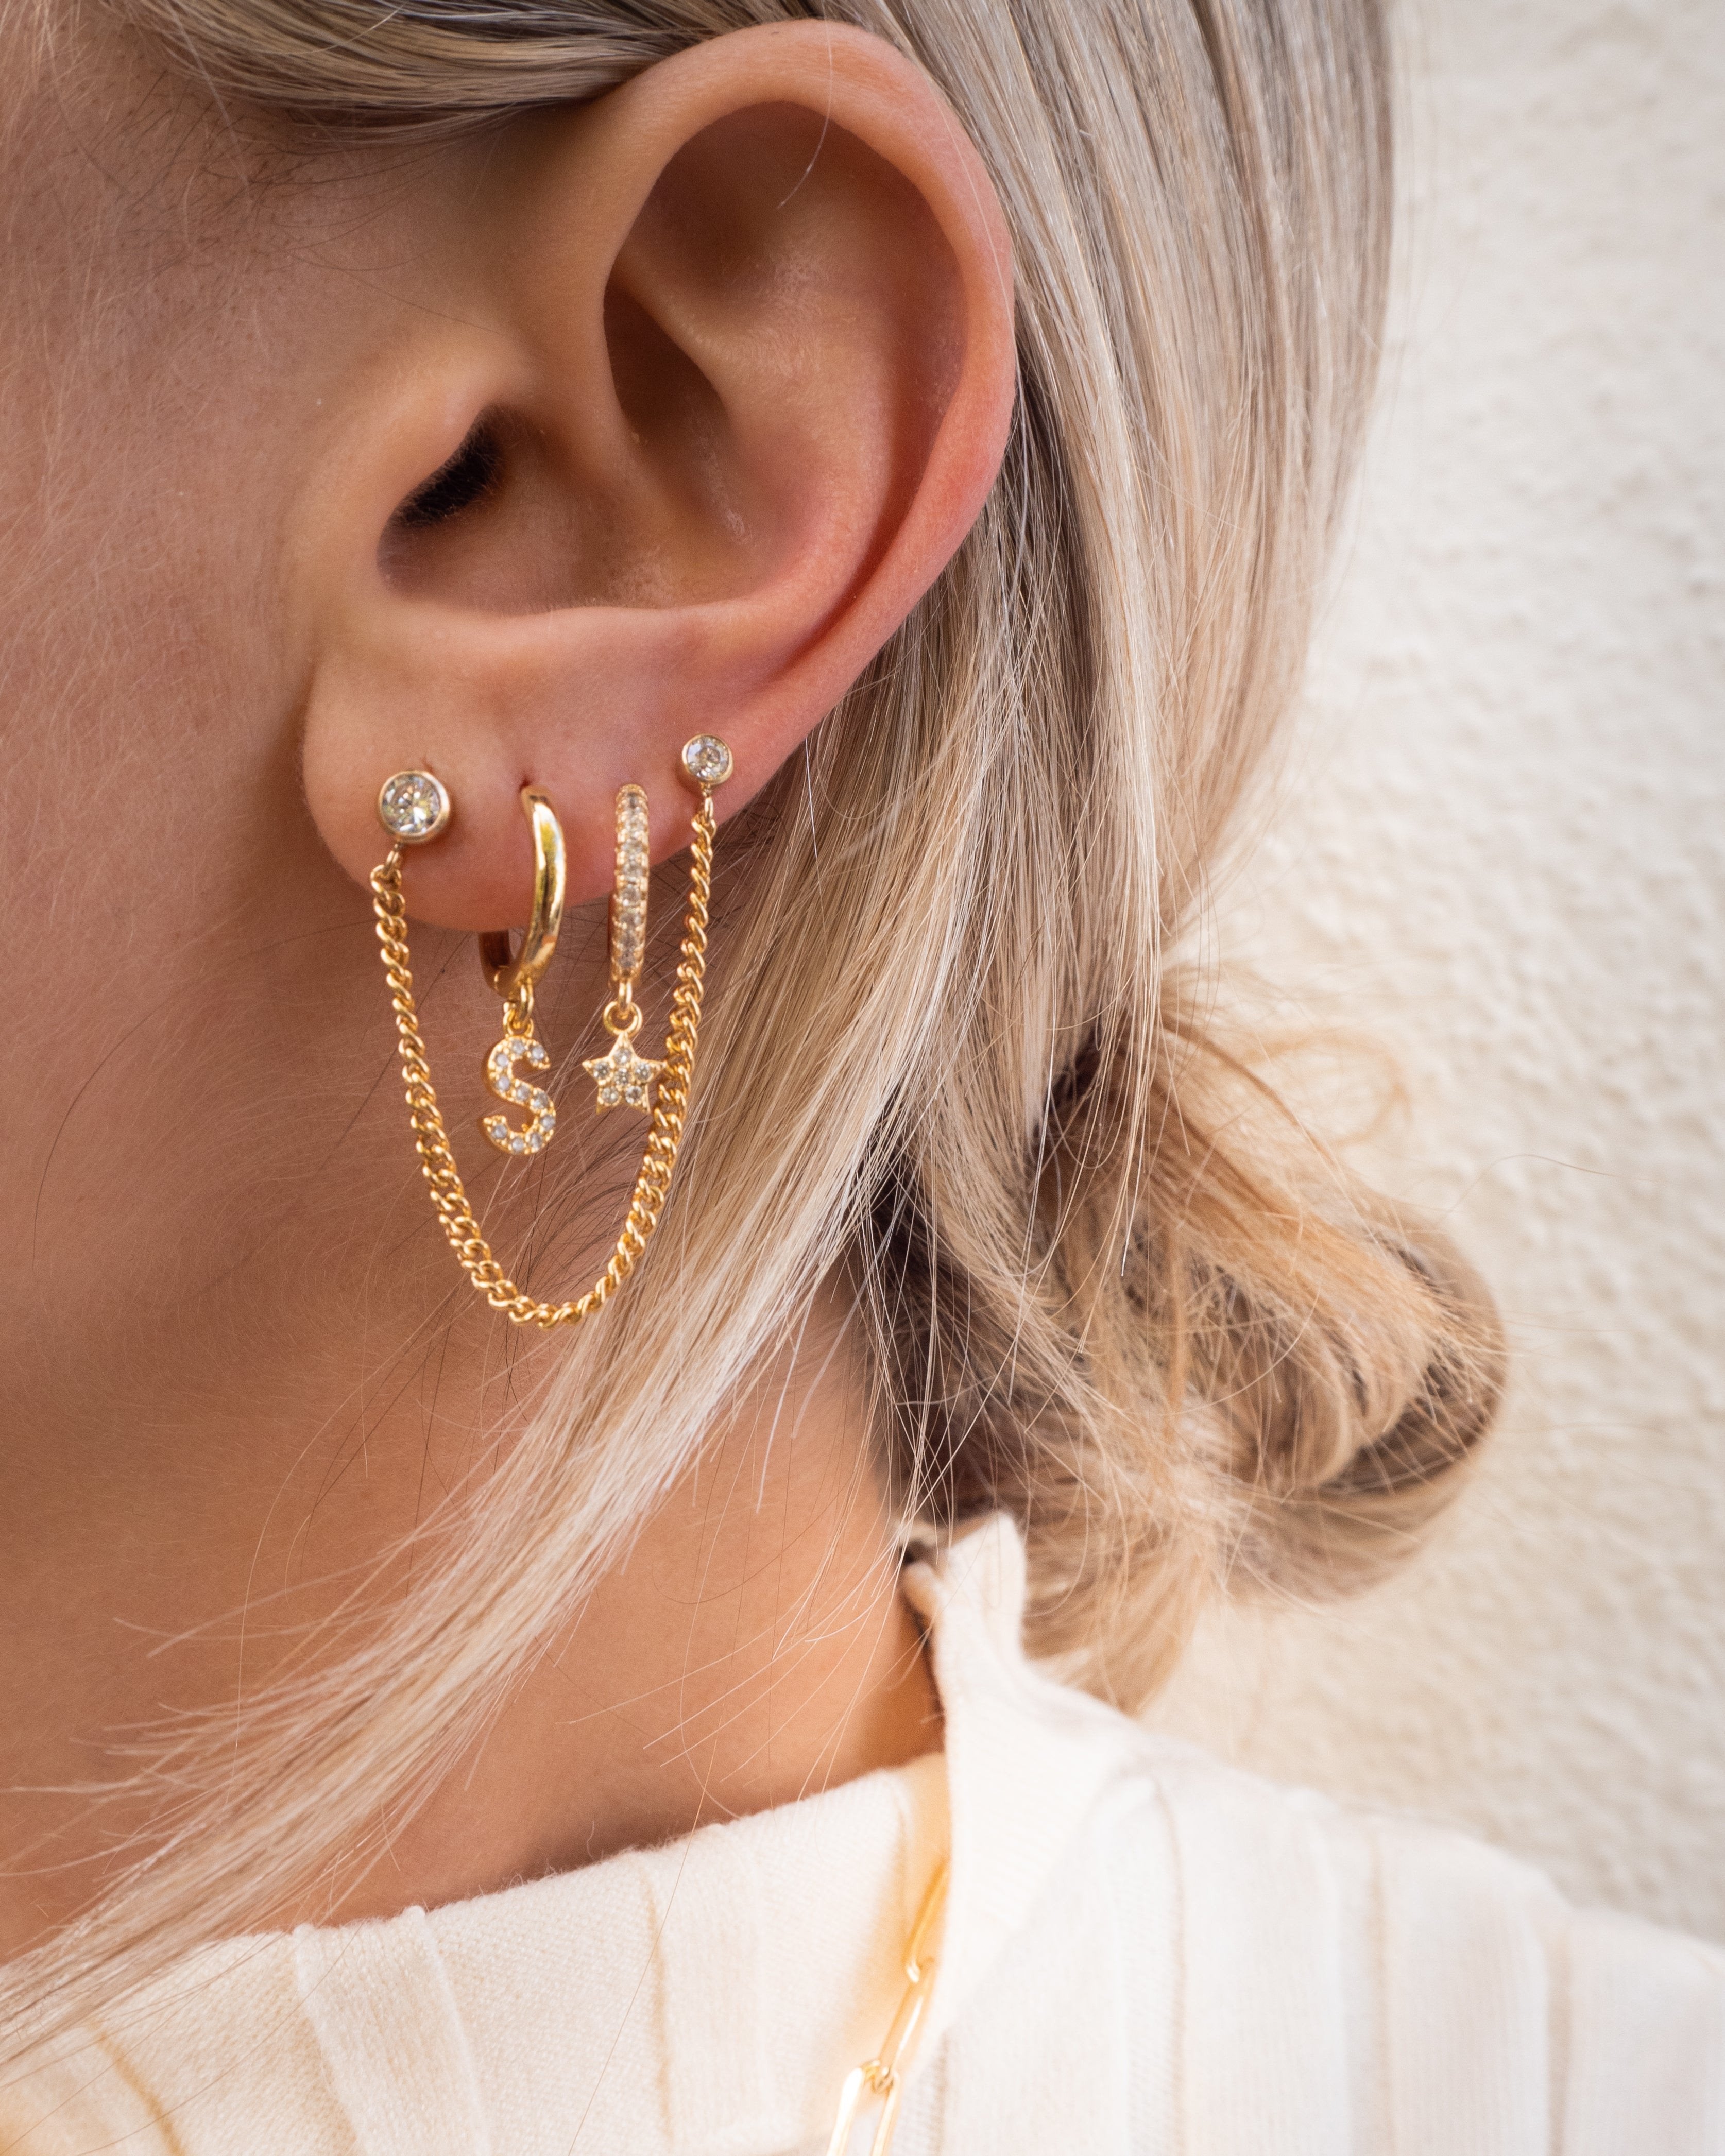 Double Piercing Earring, Double Lobe Post Earring, Cubic Zirconia Studs 2  Hole Threaded Chain Two Hole Earrings, Piercings Earring Set - Etsy |  Bridal earrings studs, Second hole earrings, Double ball earrings